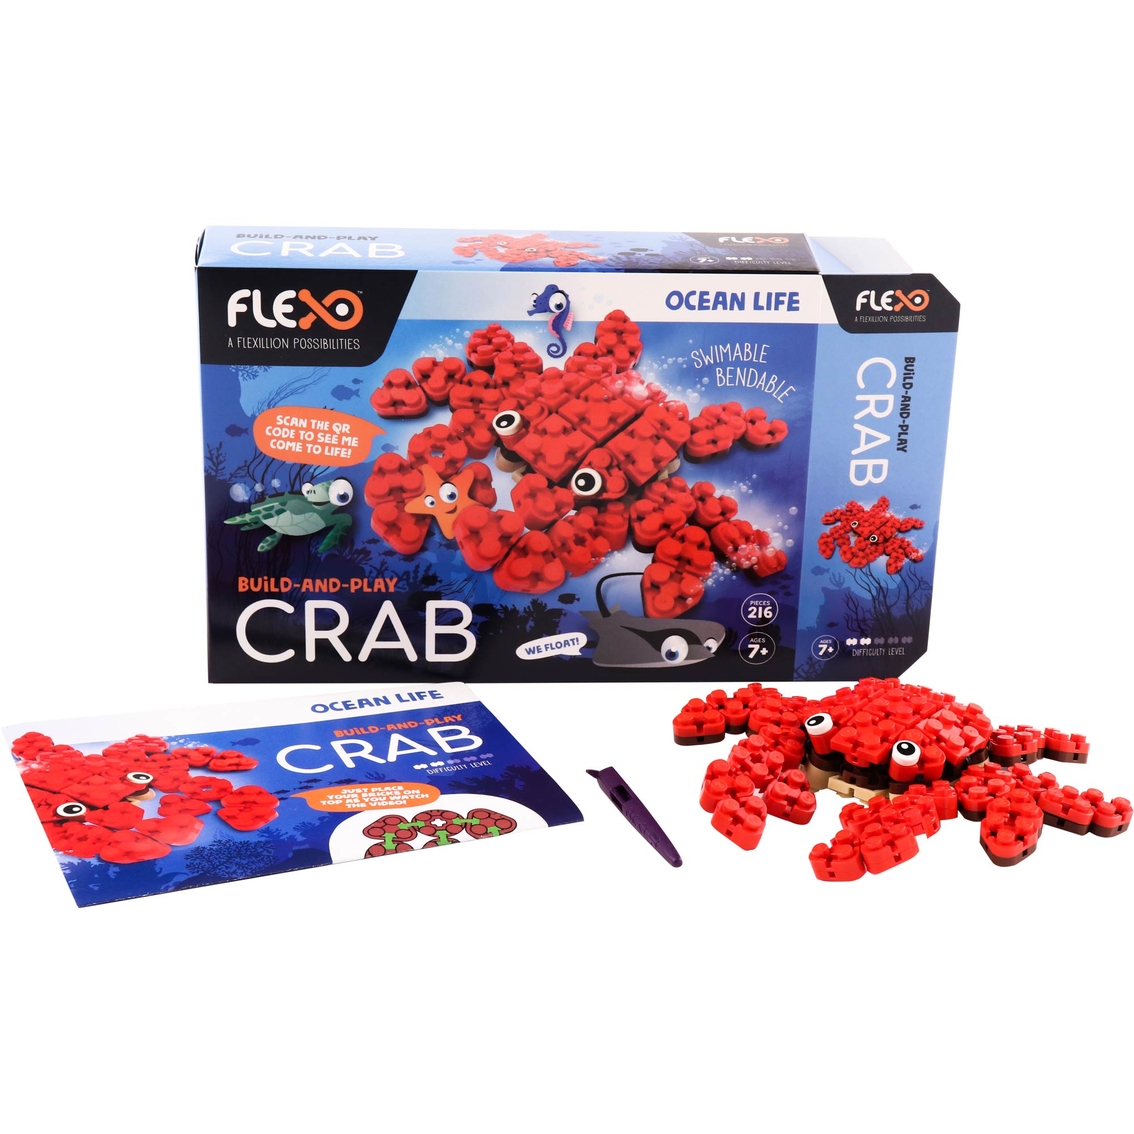 Flexo Building Bricks Ocean Life Range Crab - Image 2 of 3